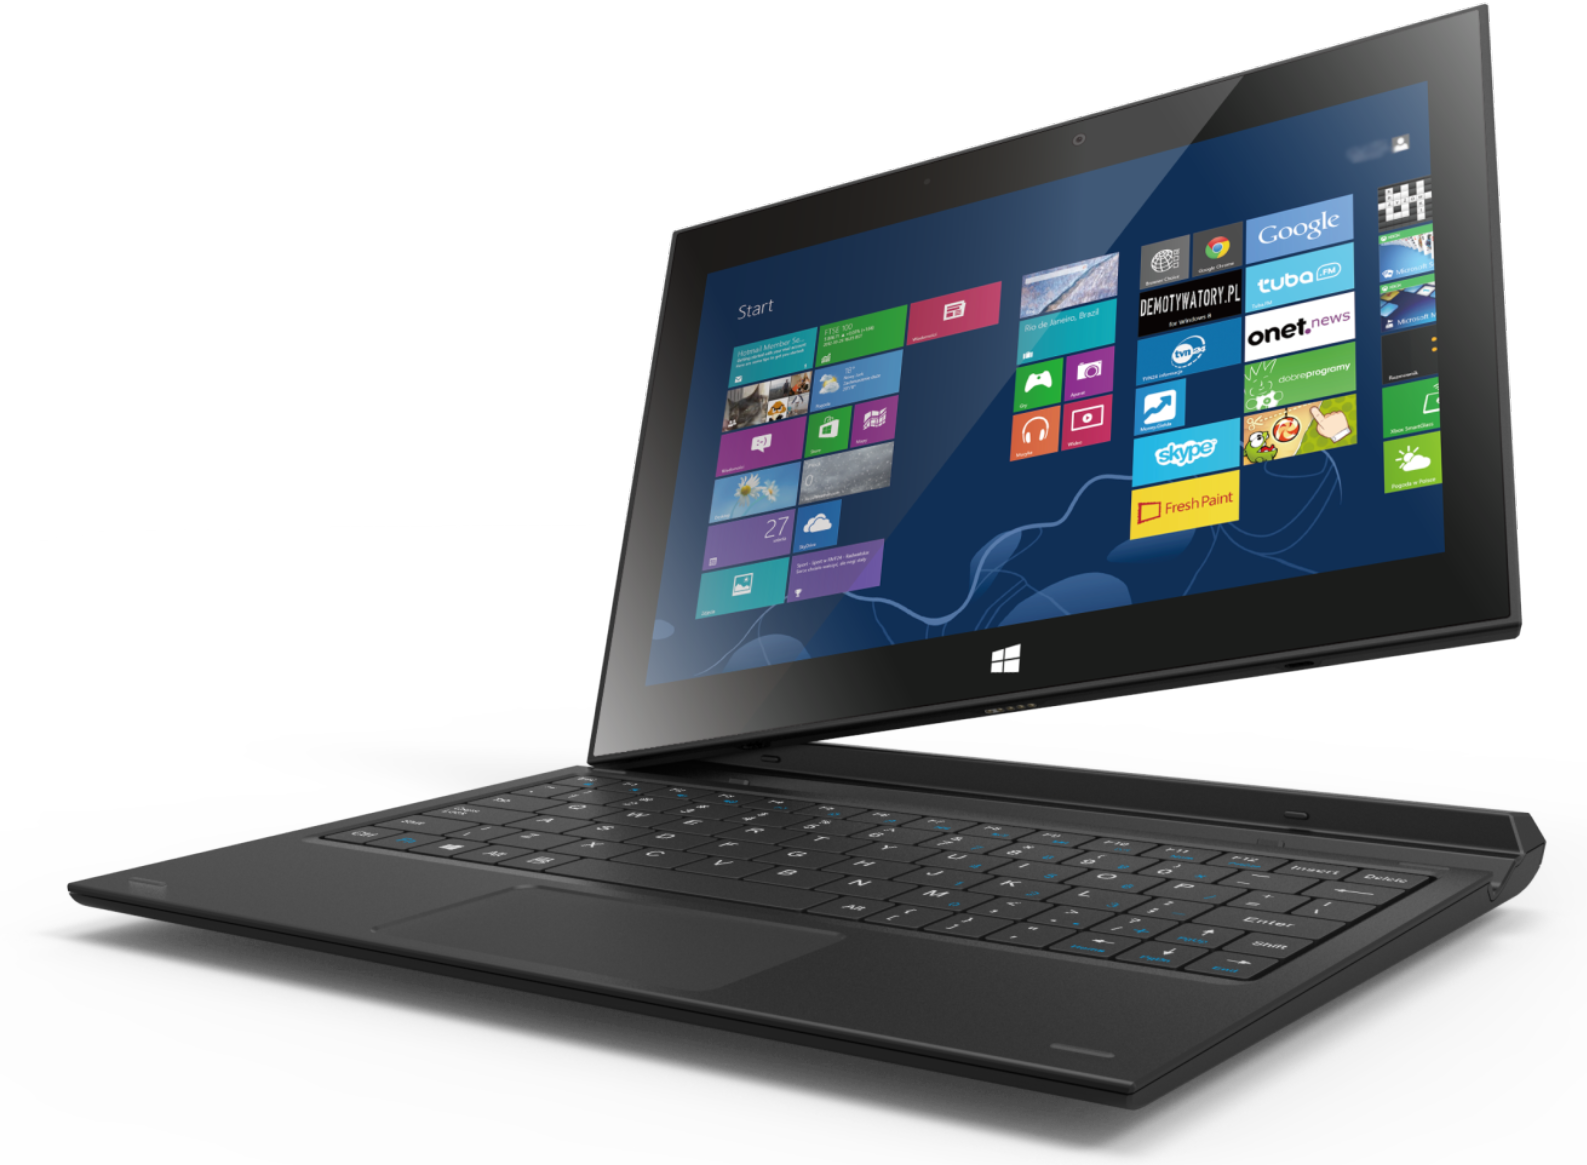 A933L_Tablet_Keyboard